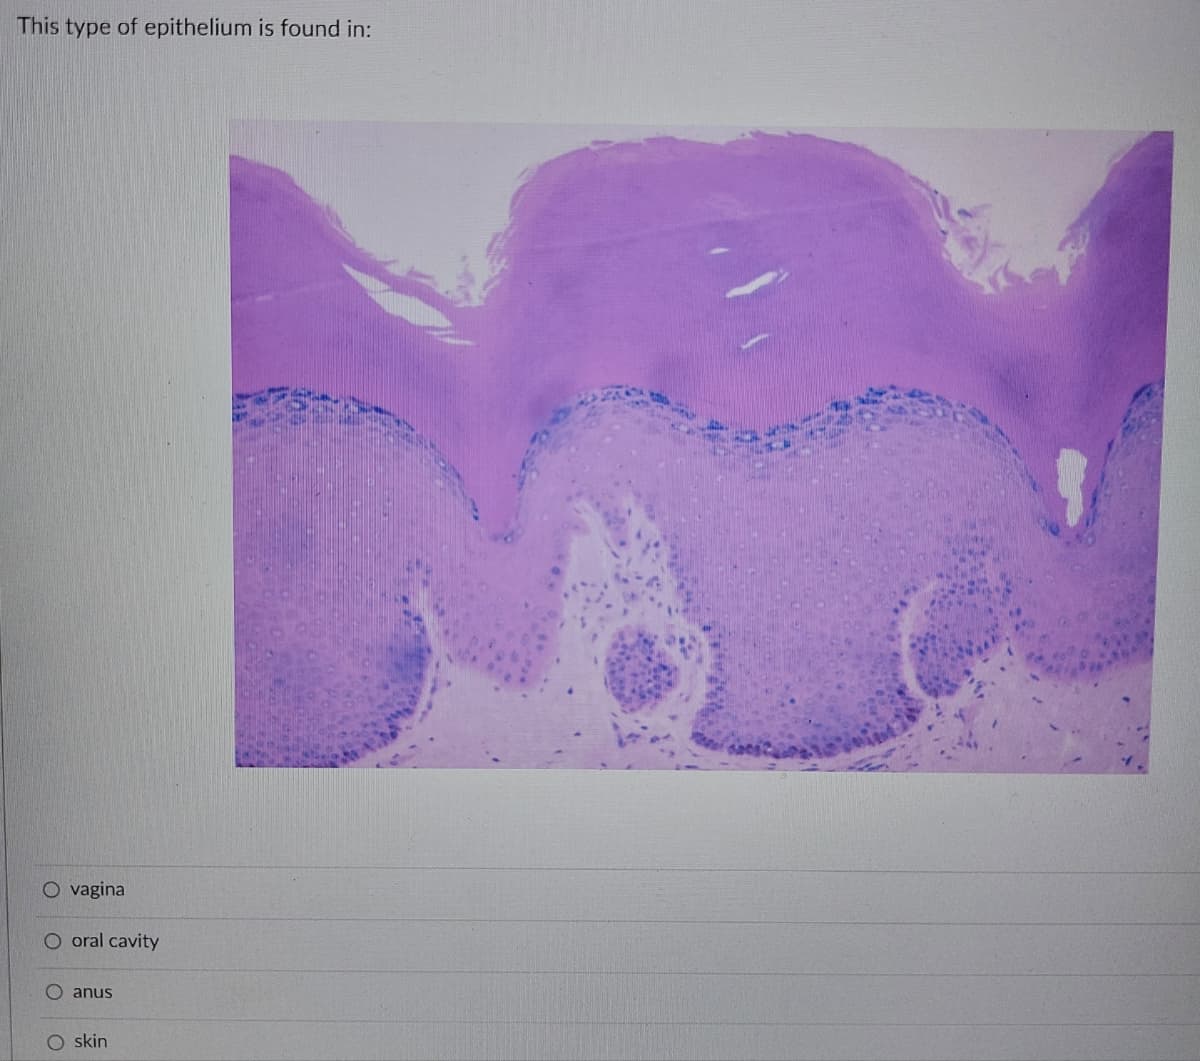 This type of epithelium is found in:
O vagina
O oral cavity
anus
O skin